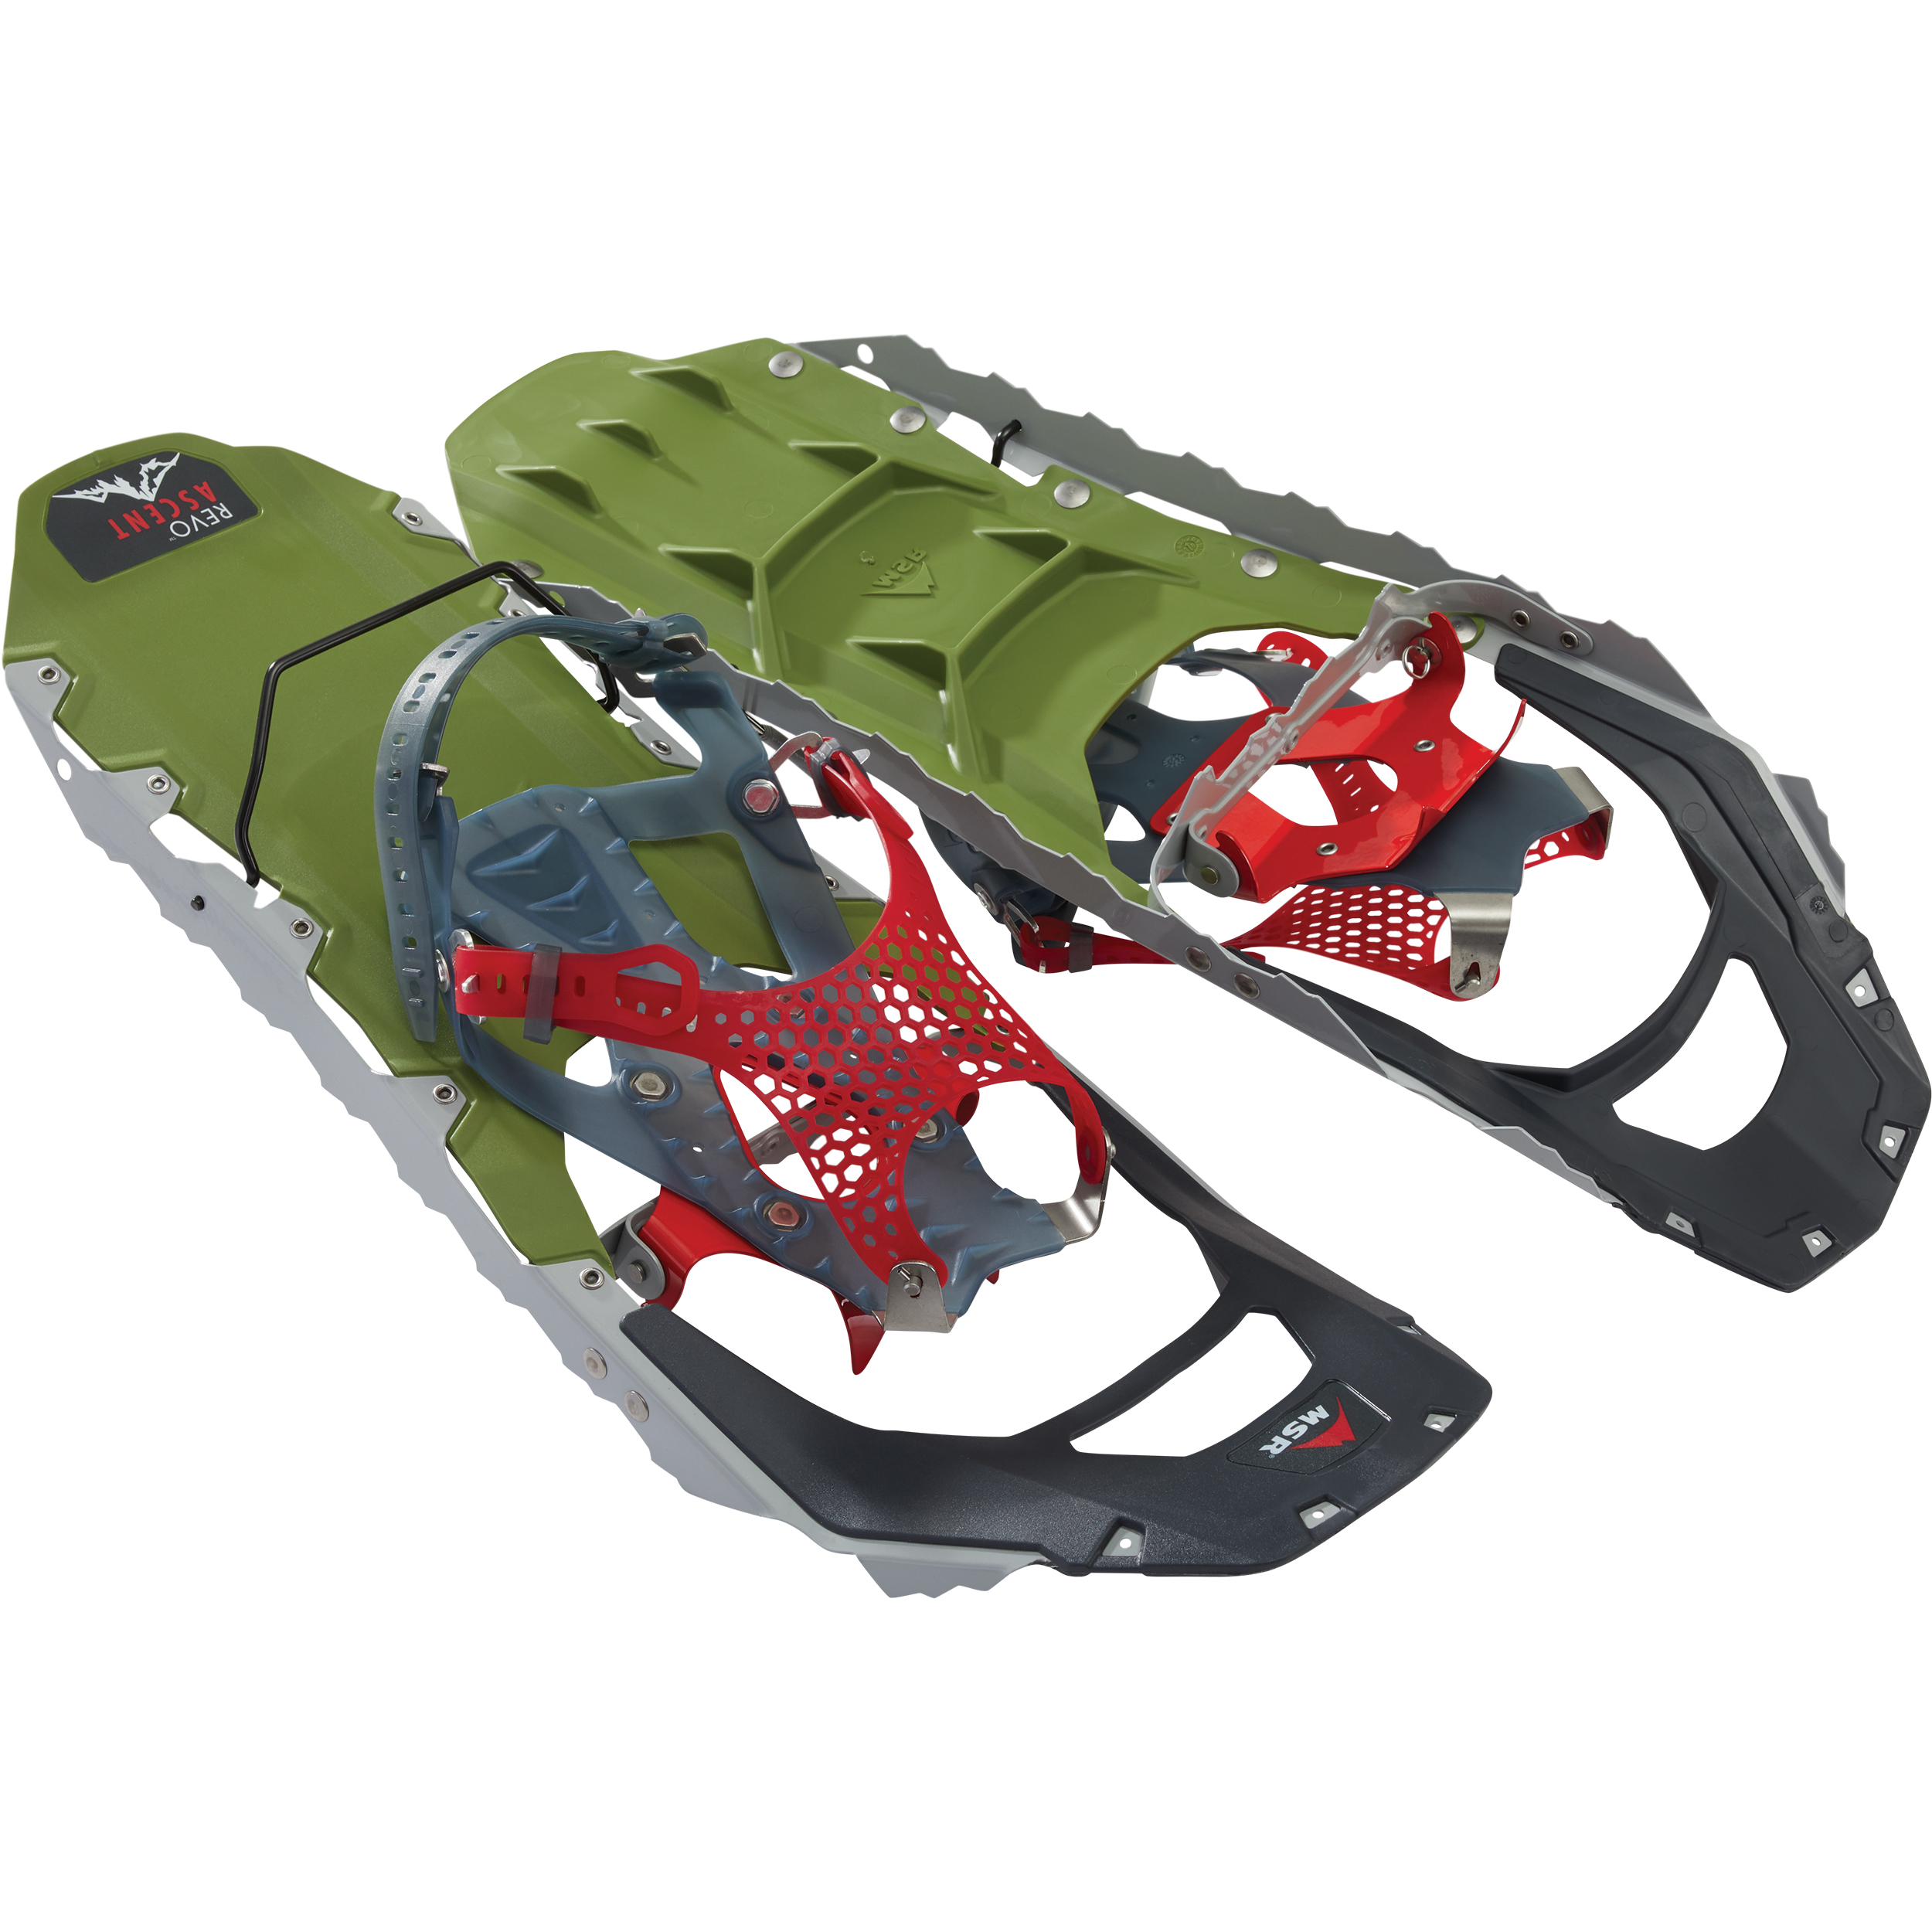 Revo™ Ascent MSR Snowshoes - Ultra-durable, All-Terrain | MSR